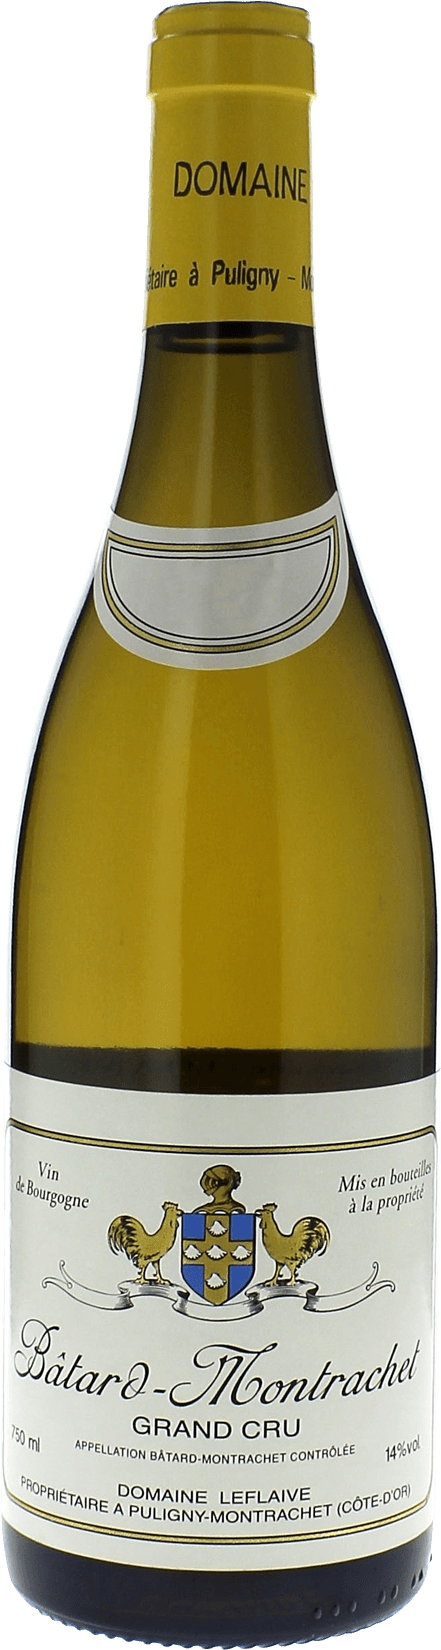 Batard montrachet grand cru 2016 Domaine LEFLAIVE Vincent, Bourgogne blanc